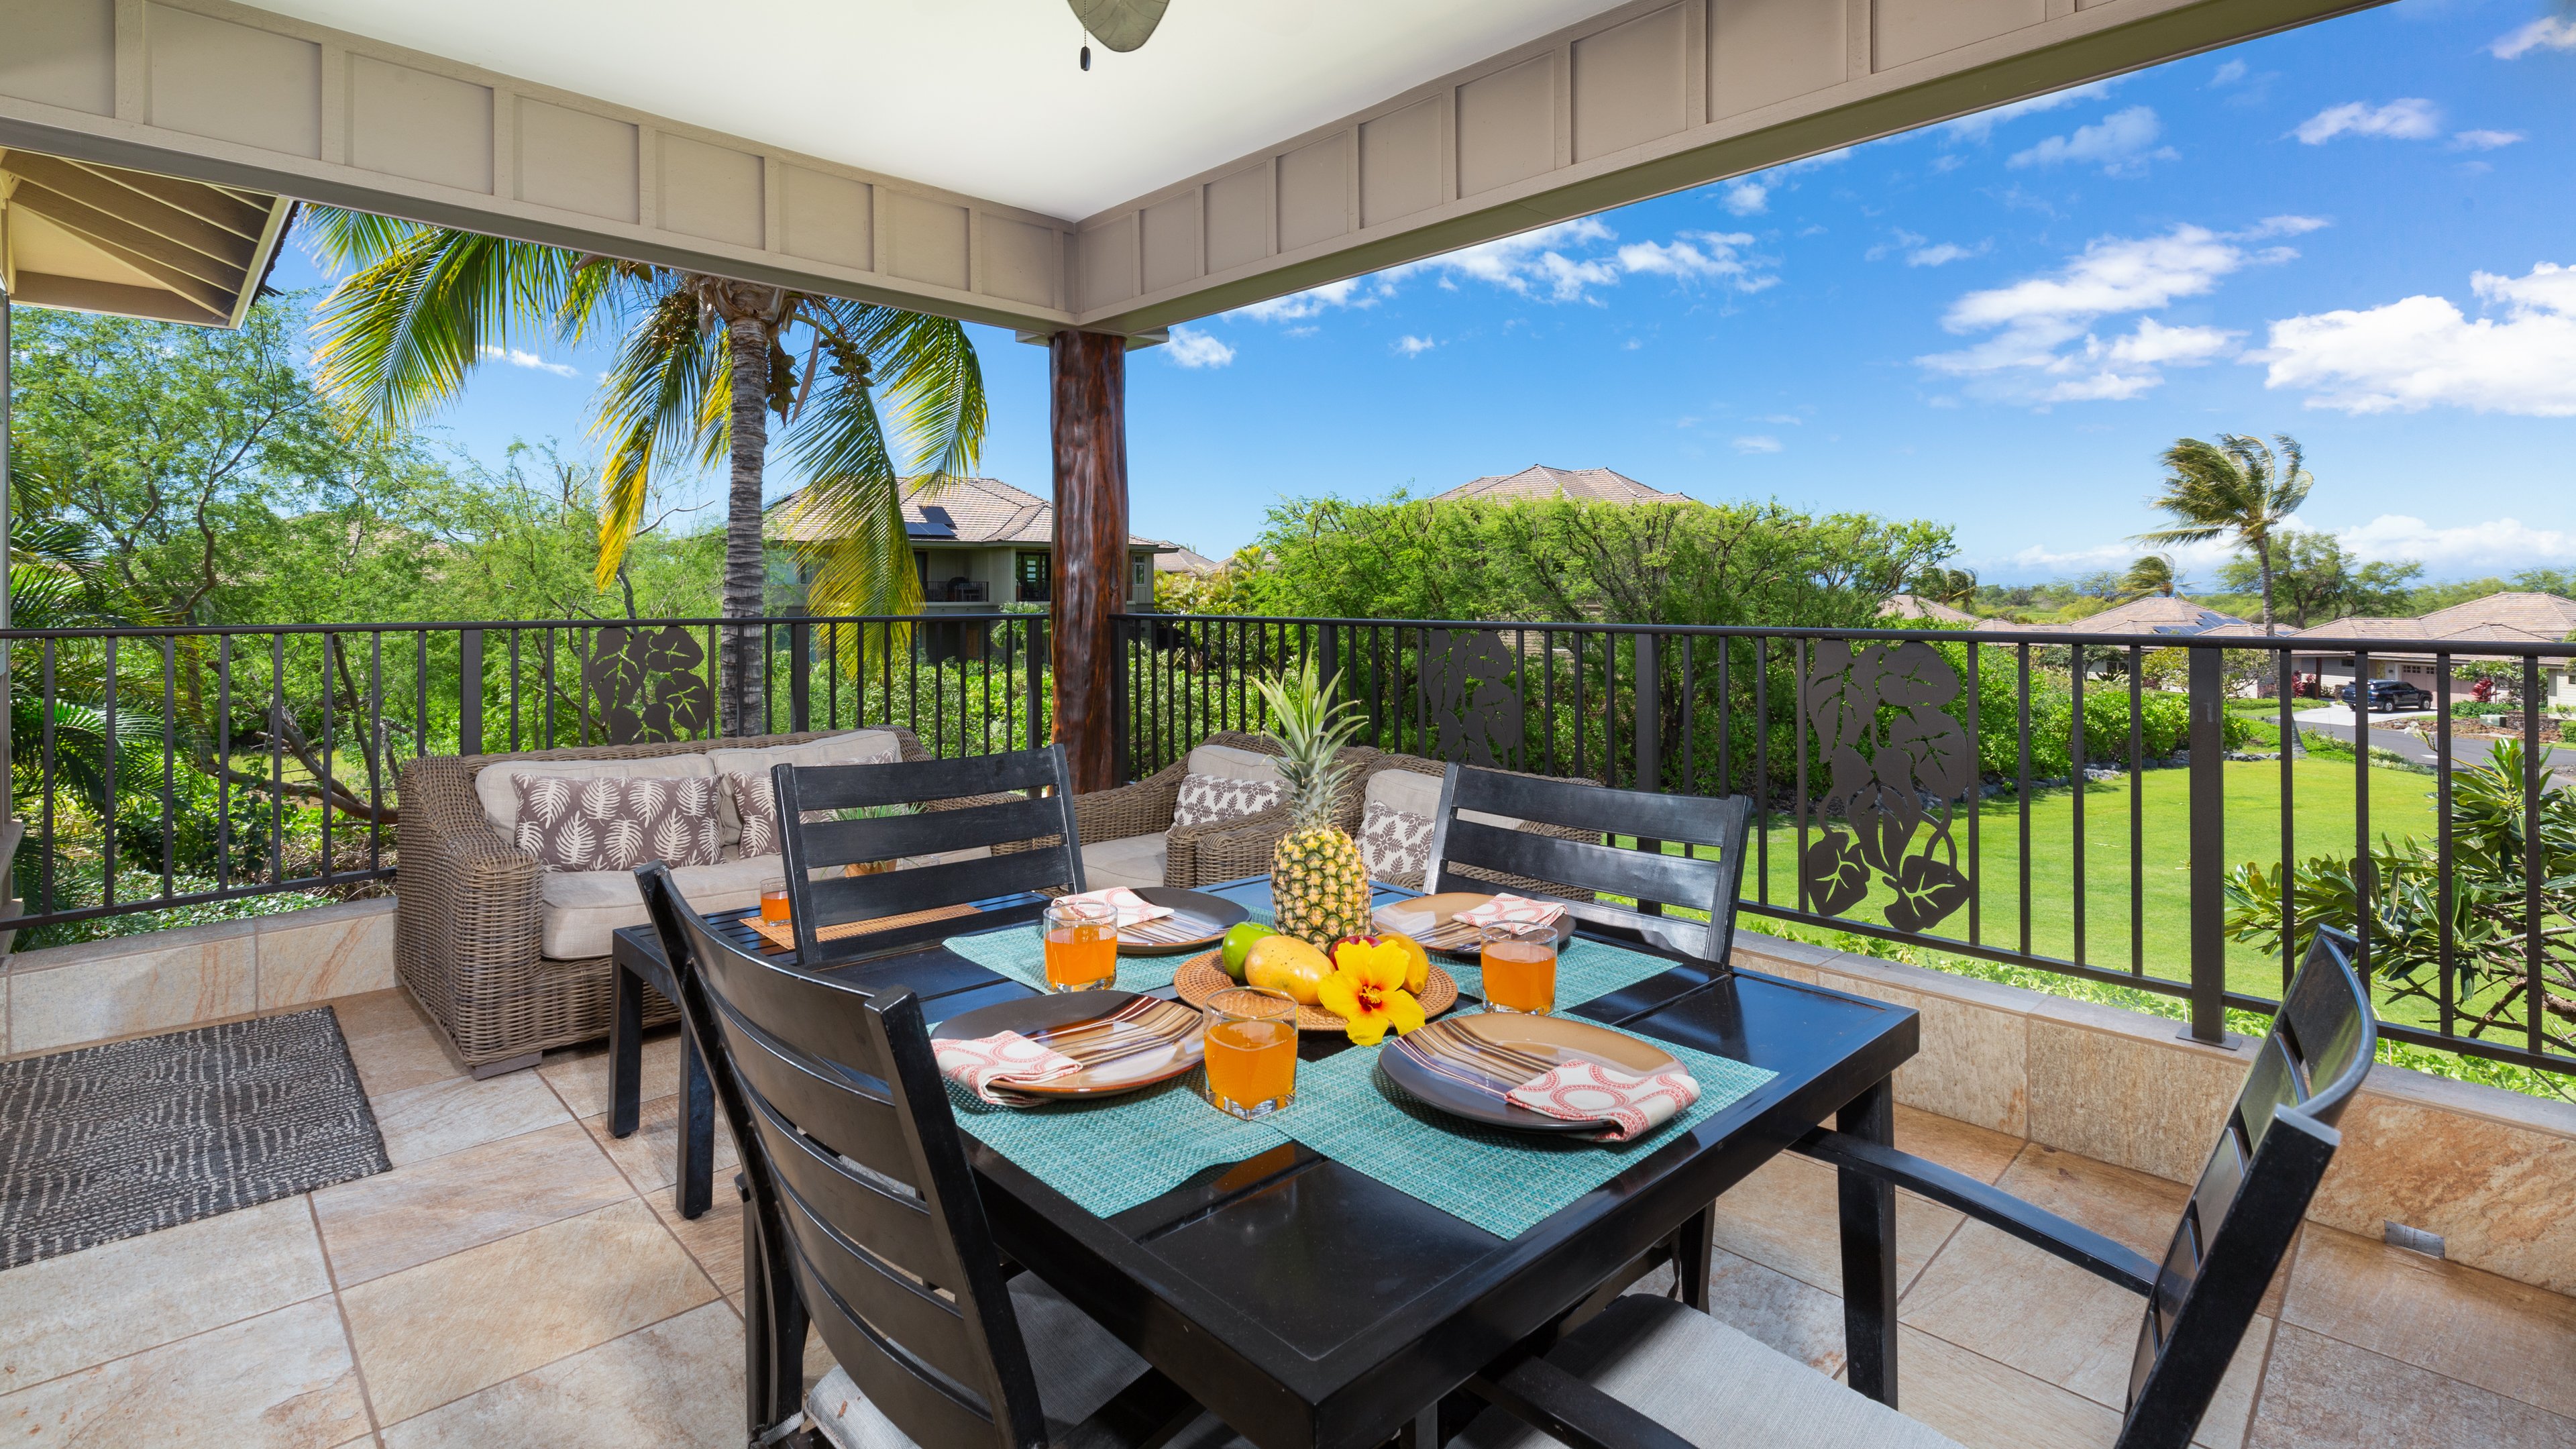 Welcome to White Coral Villa in the beautiful KaMilo community at the Mauna Lani Resort!